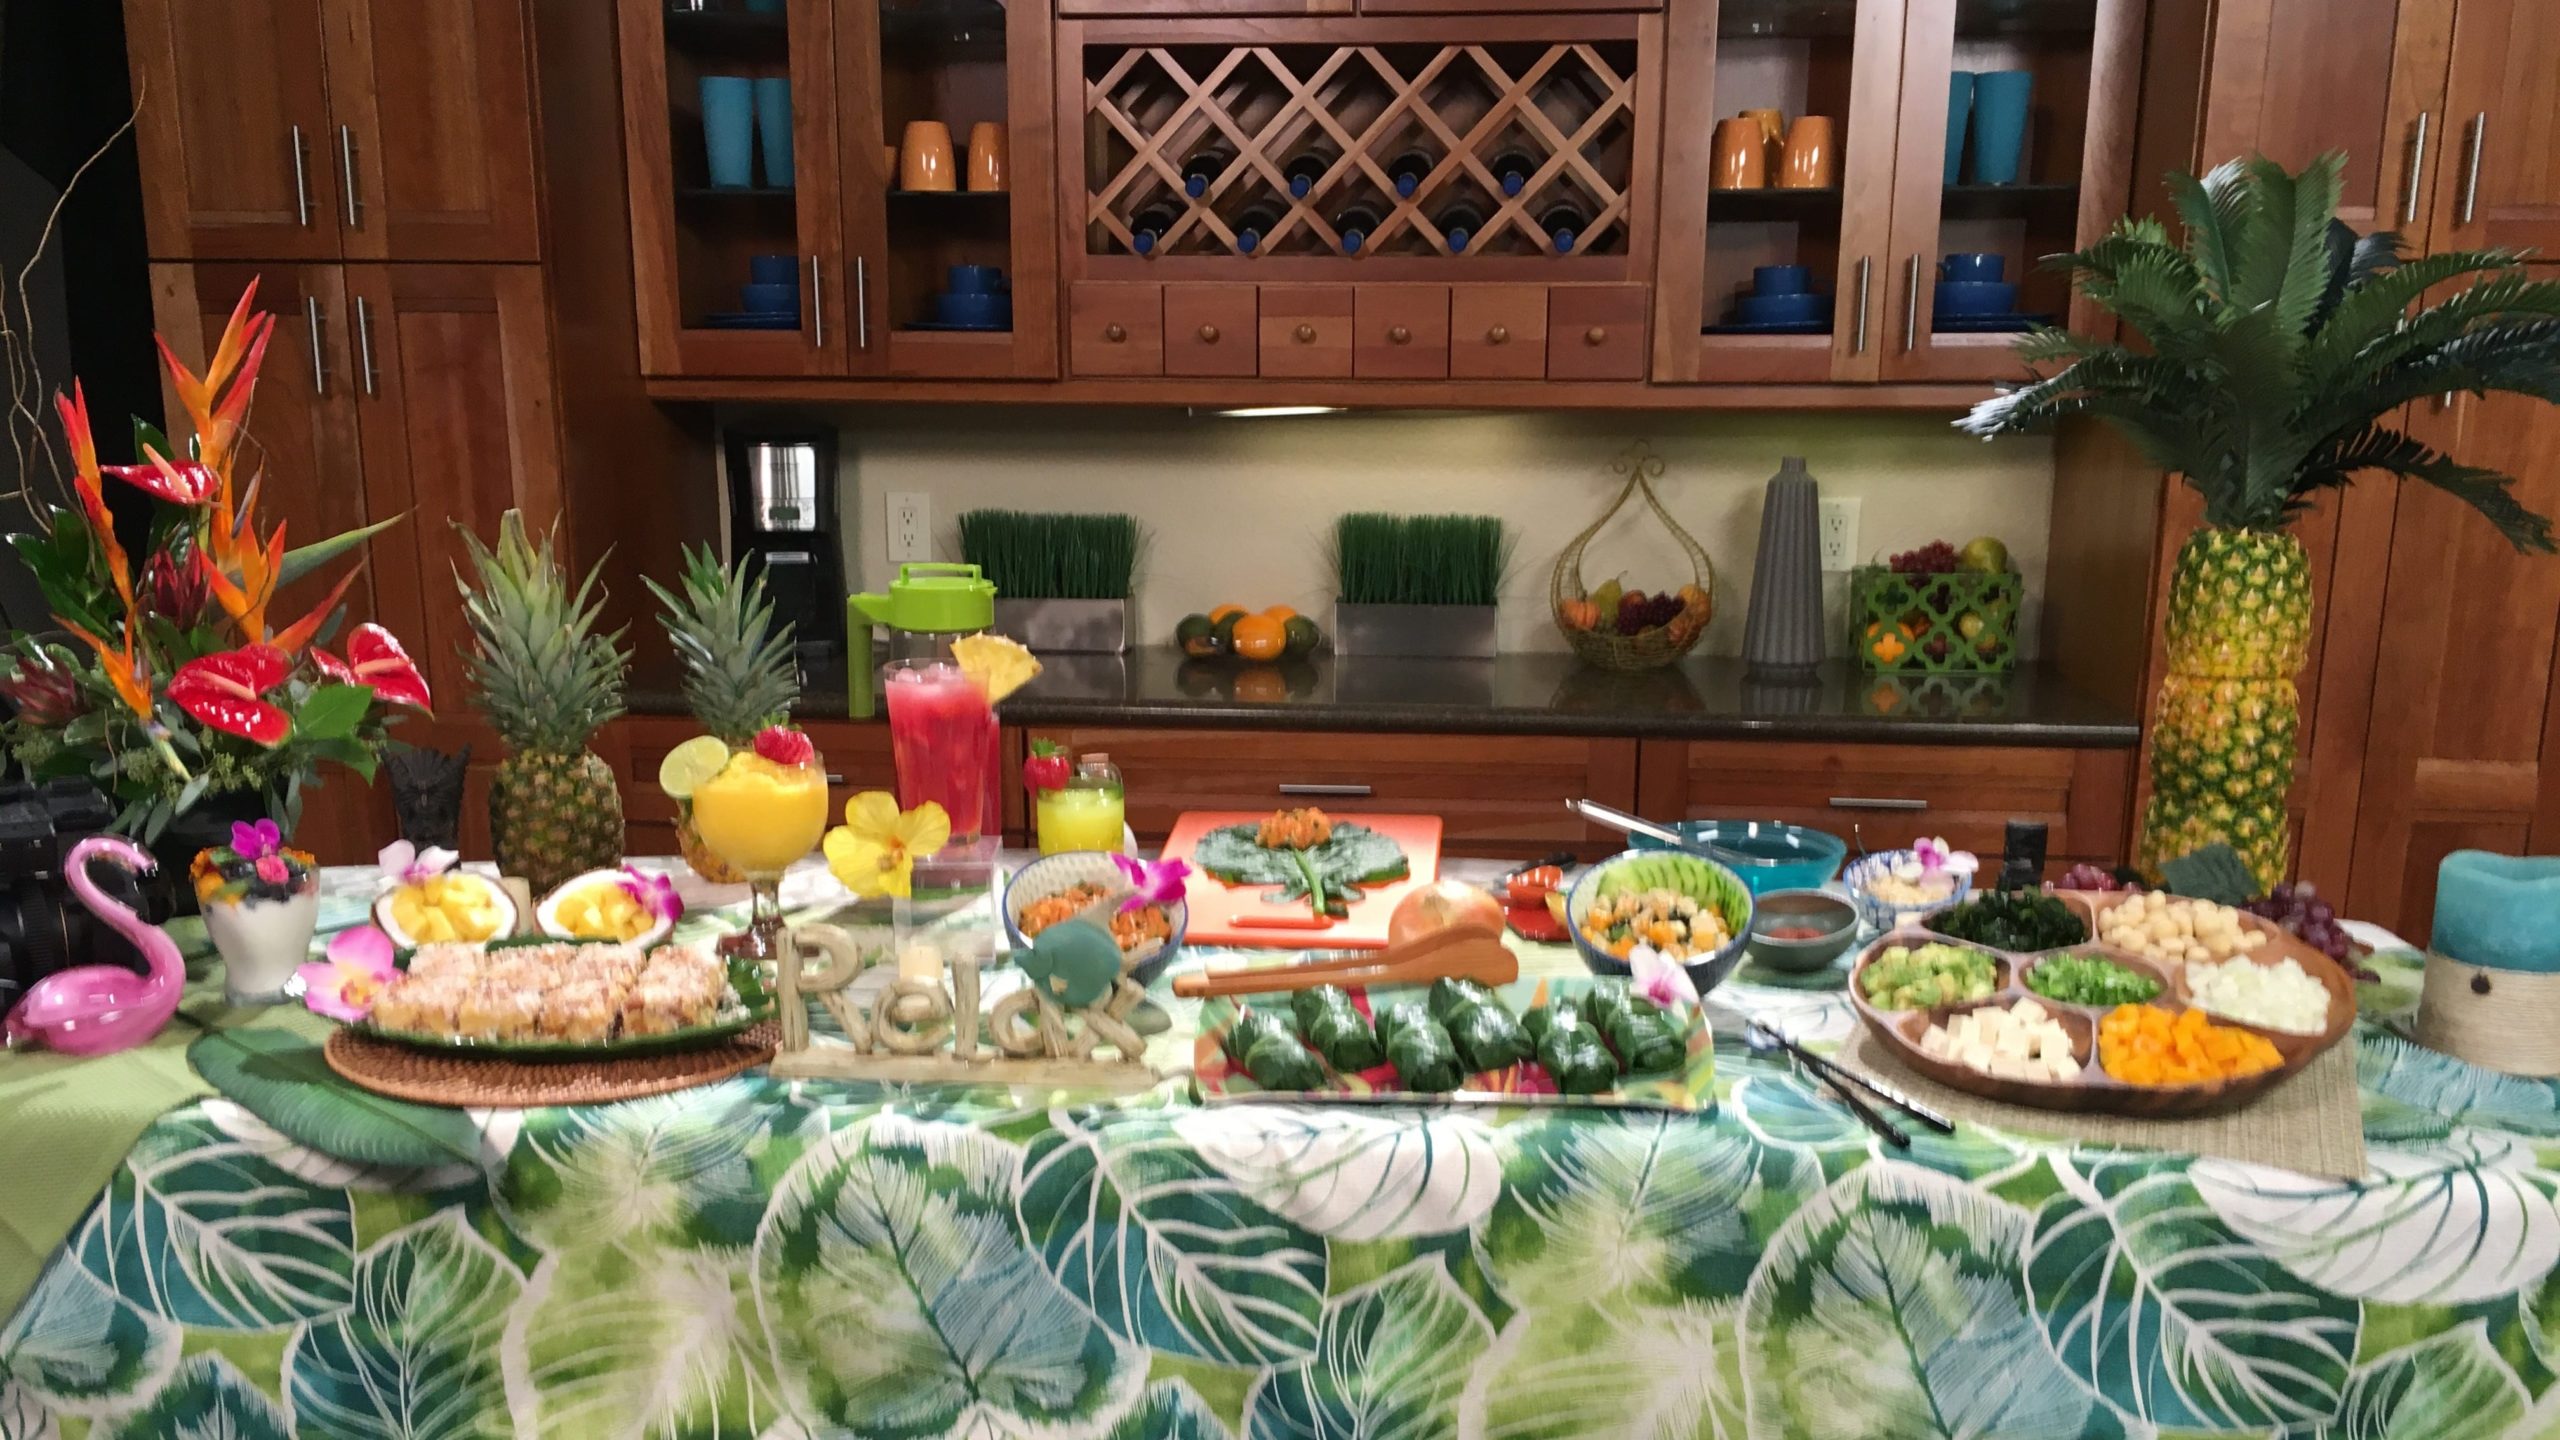 How to transform traditional Hawaiian foods into a vegetarian Hawaiian luau is demonstrated on ABC 10 lifestyle TV show.